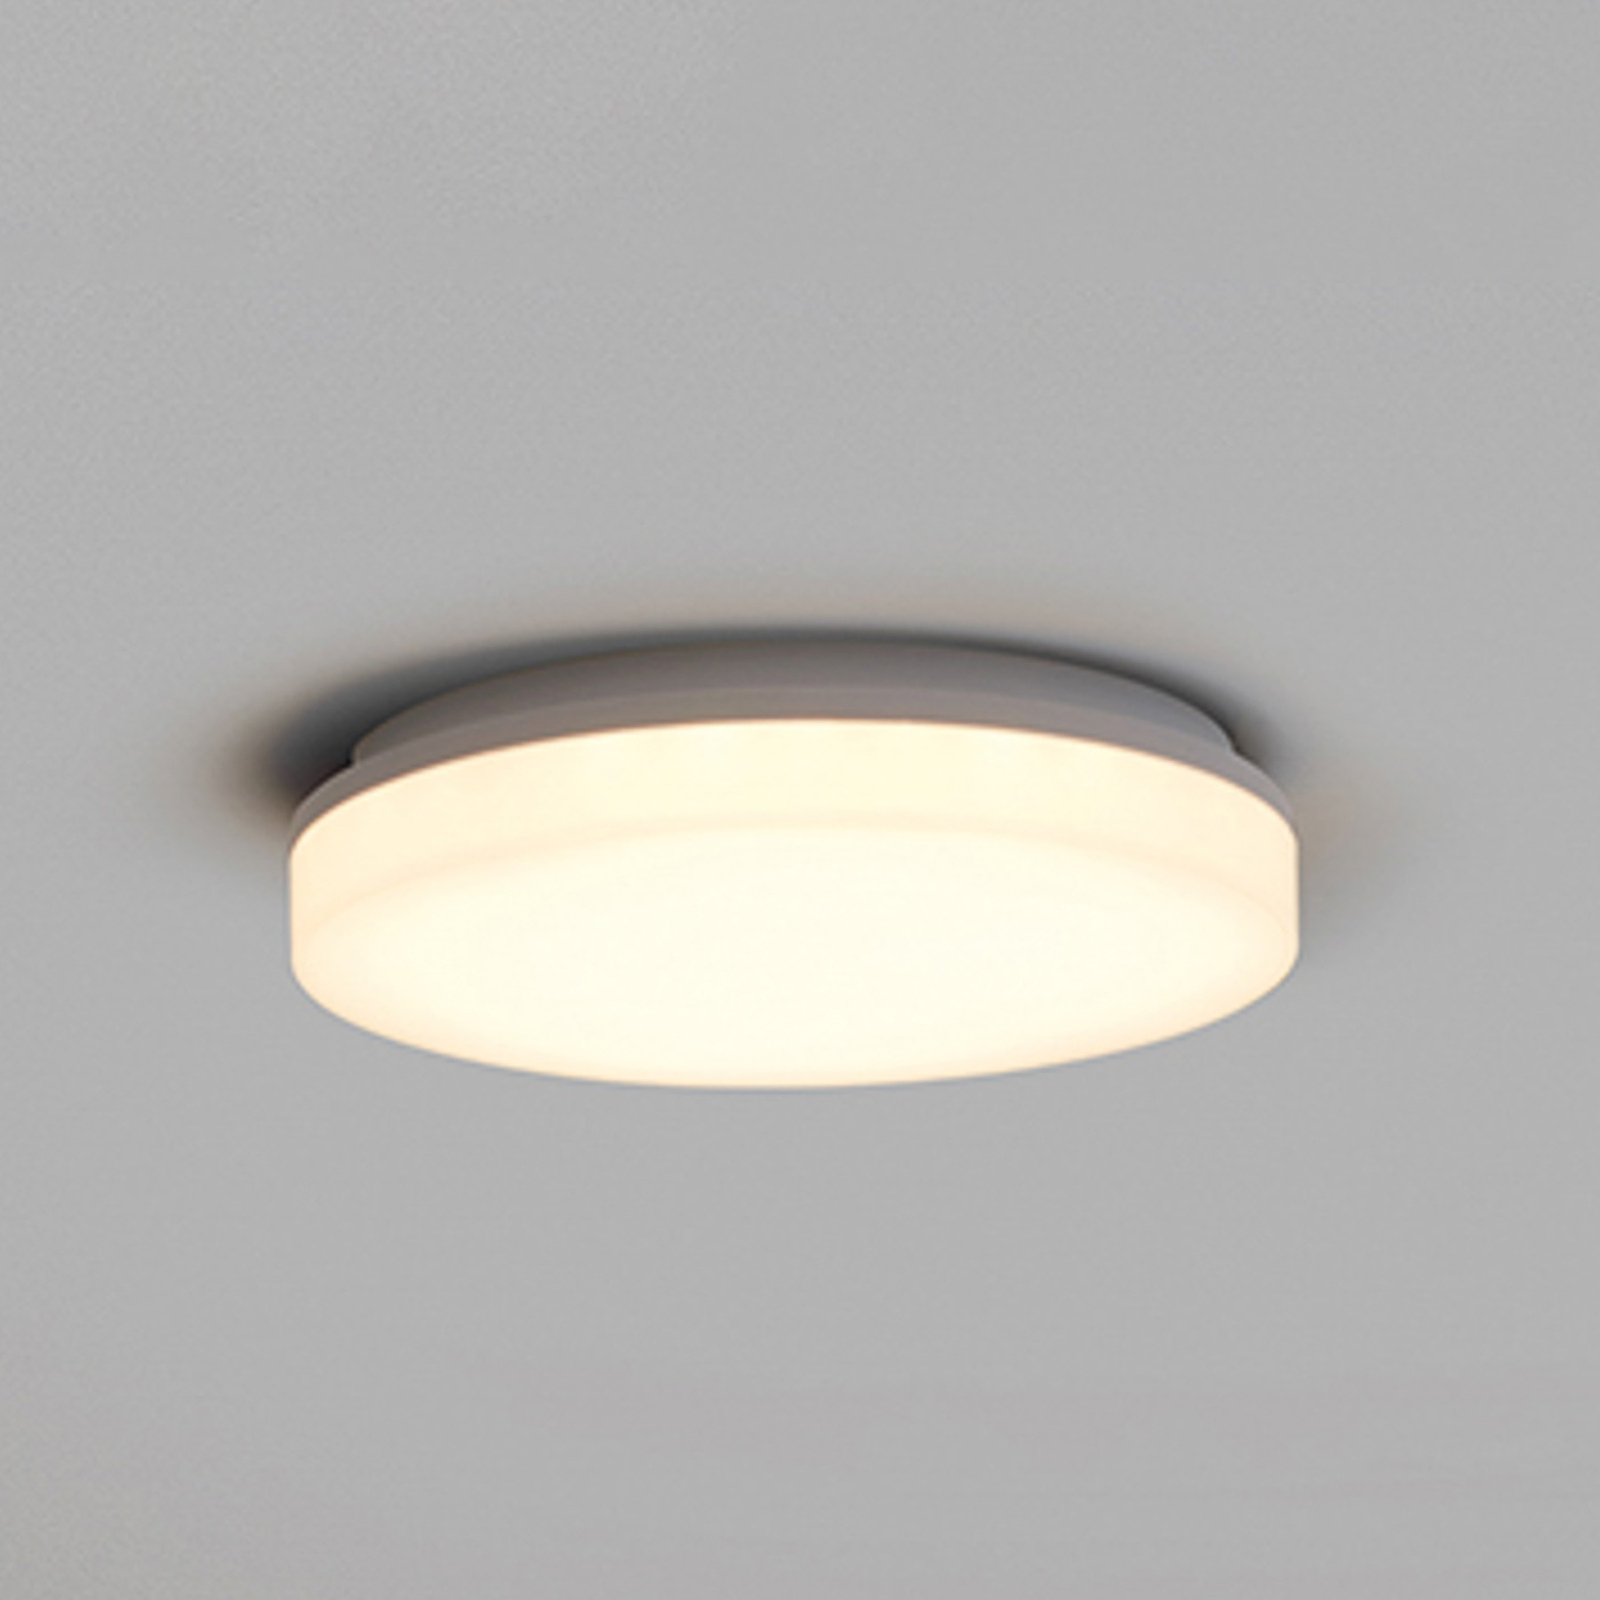 RZB HB 505 LED ceiling light CCT switch, Ø22cm 15W